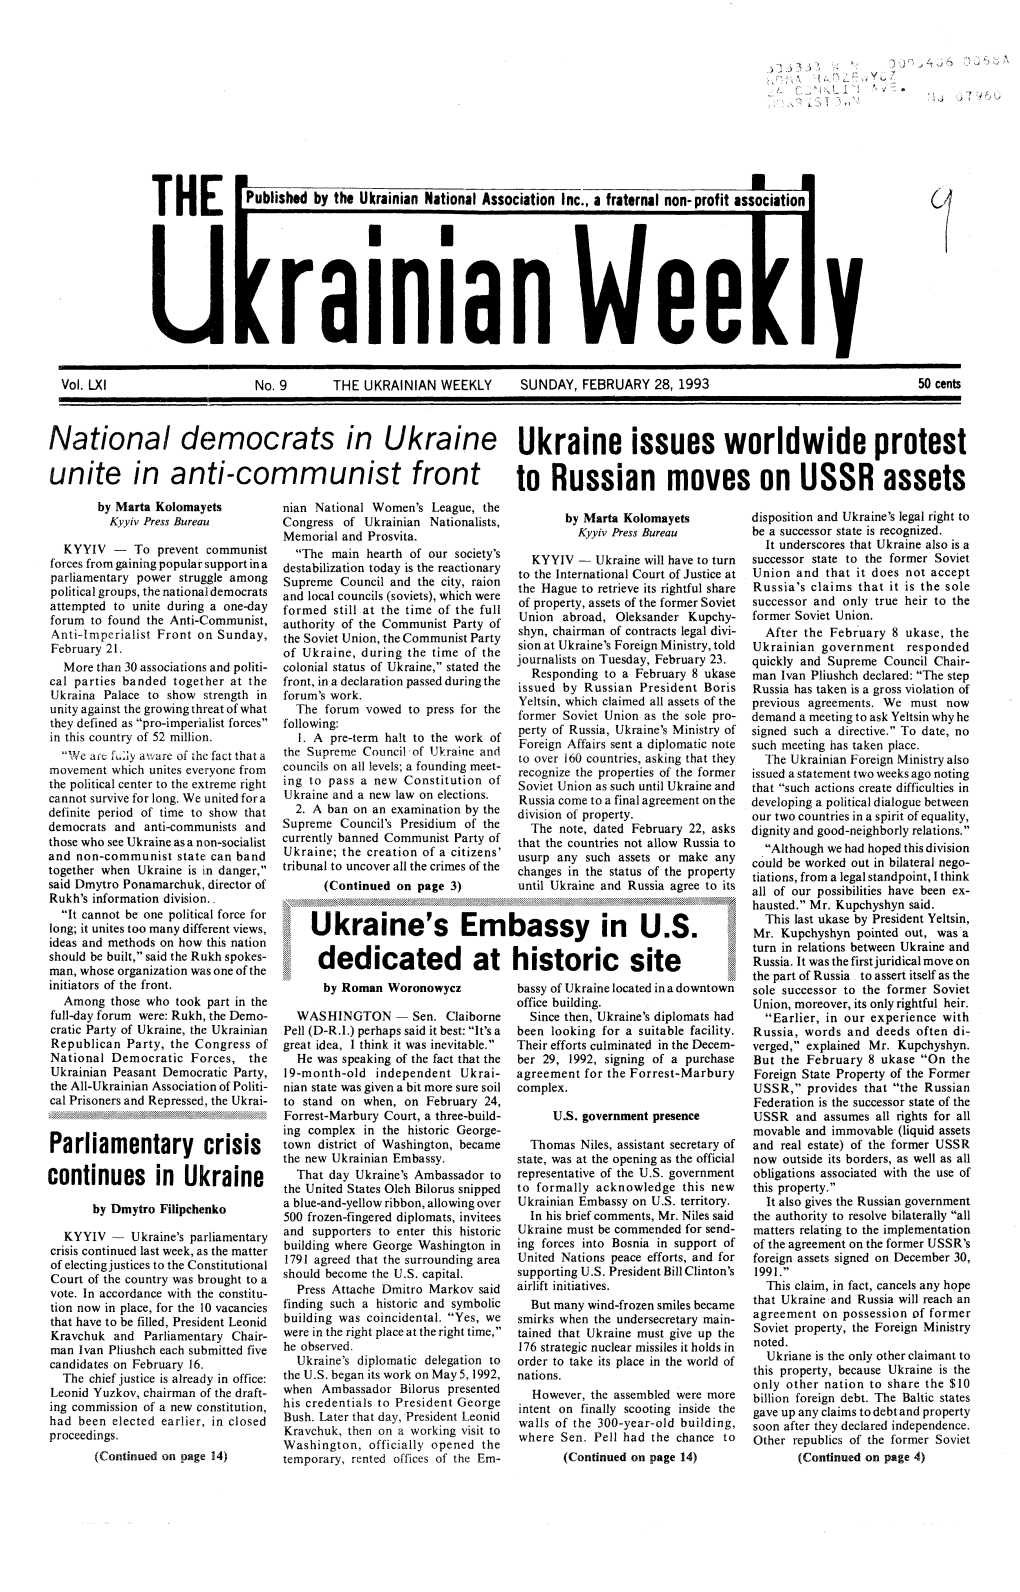 The Ukrainian Weekly 1993, No.9